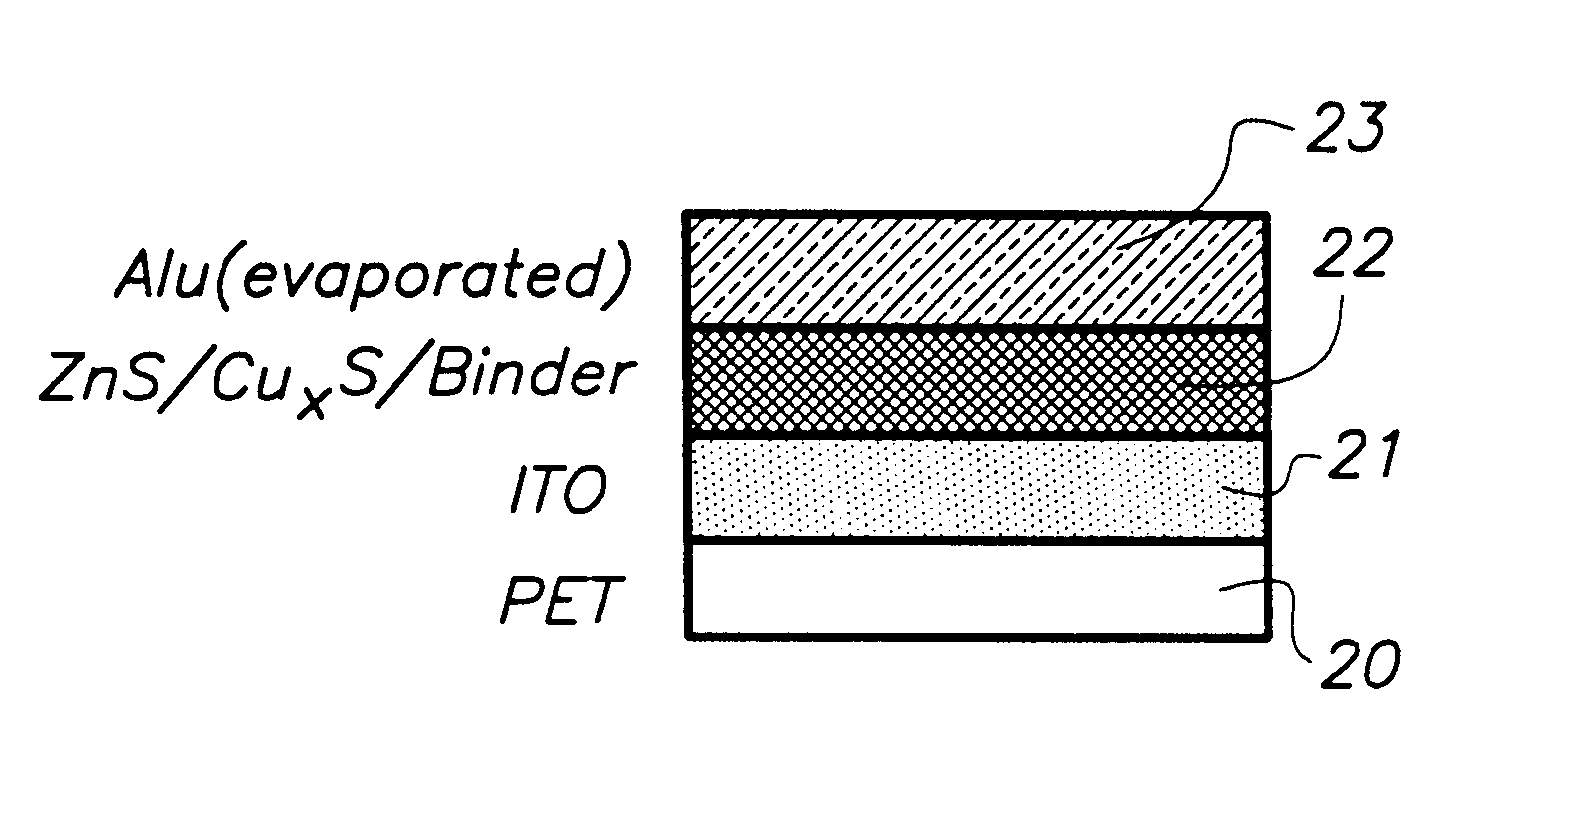 Manufacturing of a thin inorganic light emitting diode